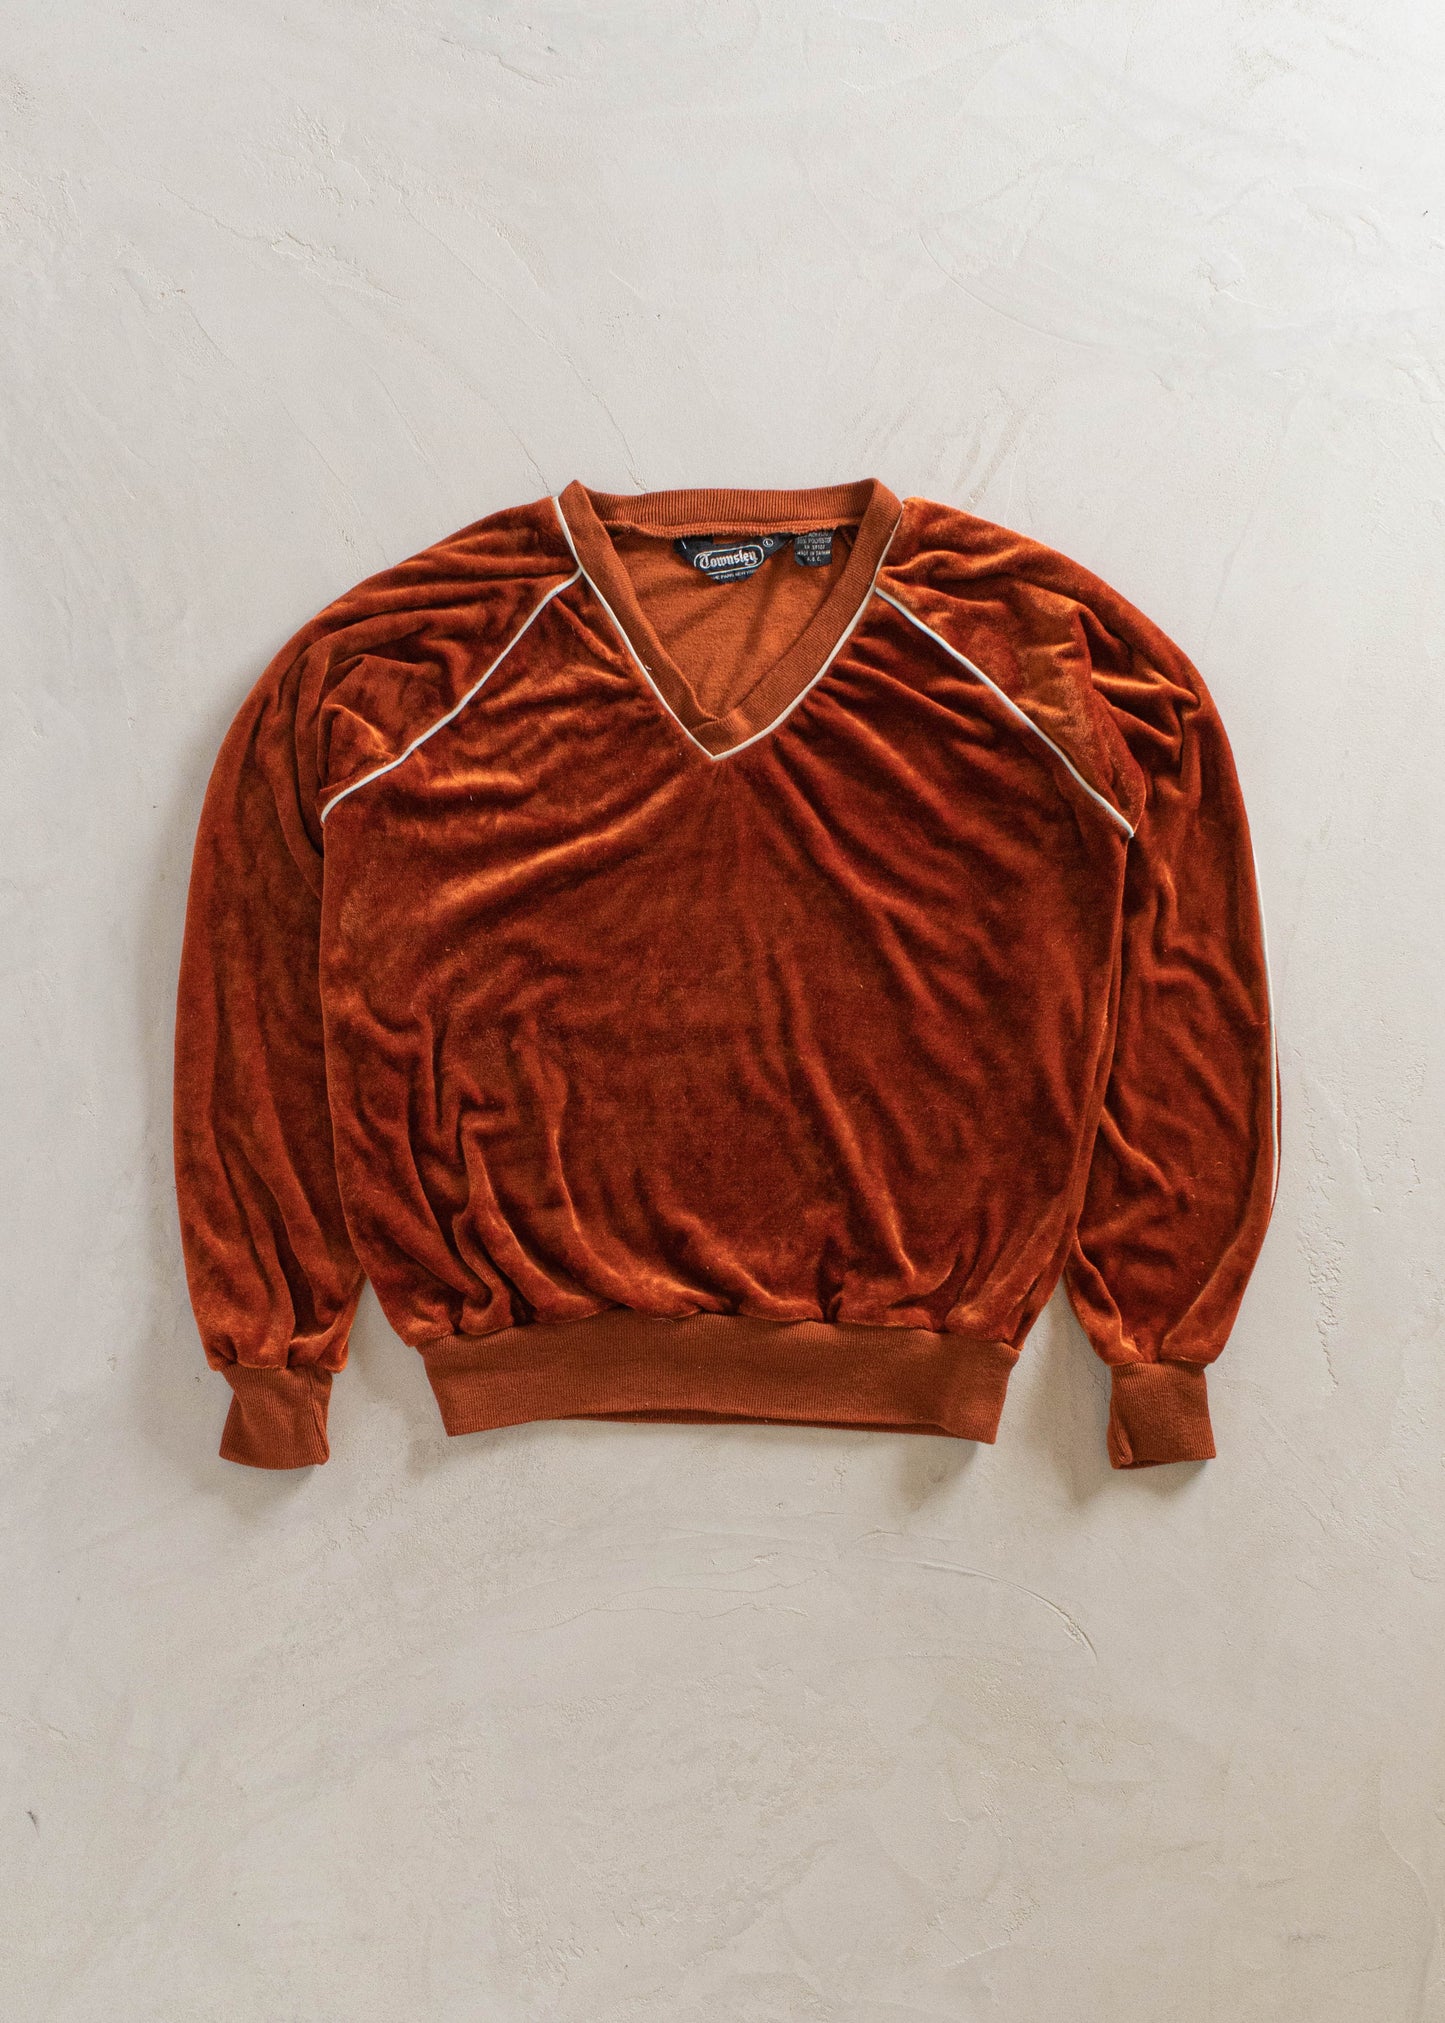 1970s Townsley Velour Long Sleeve Shirt Size S/M